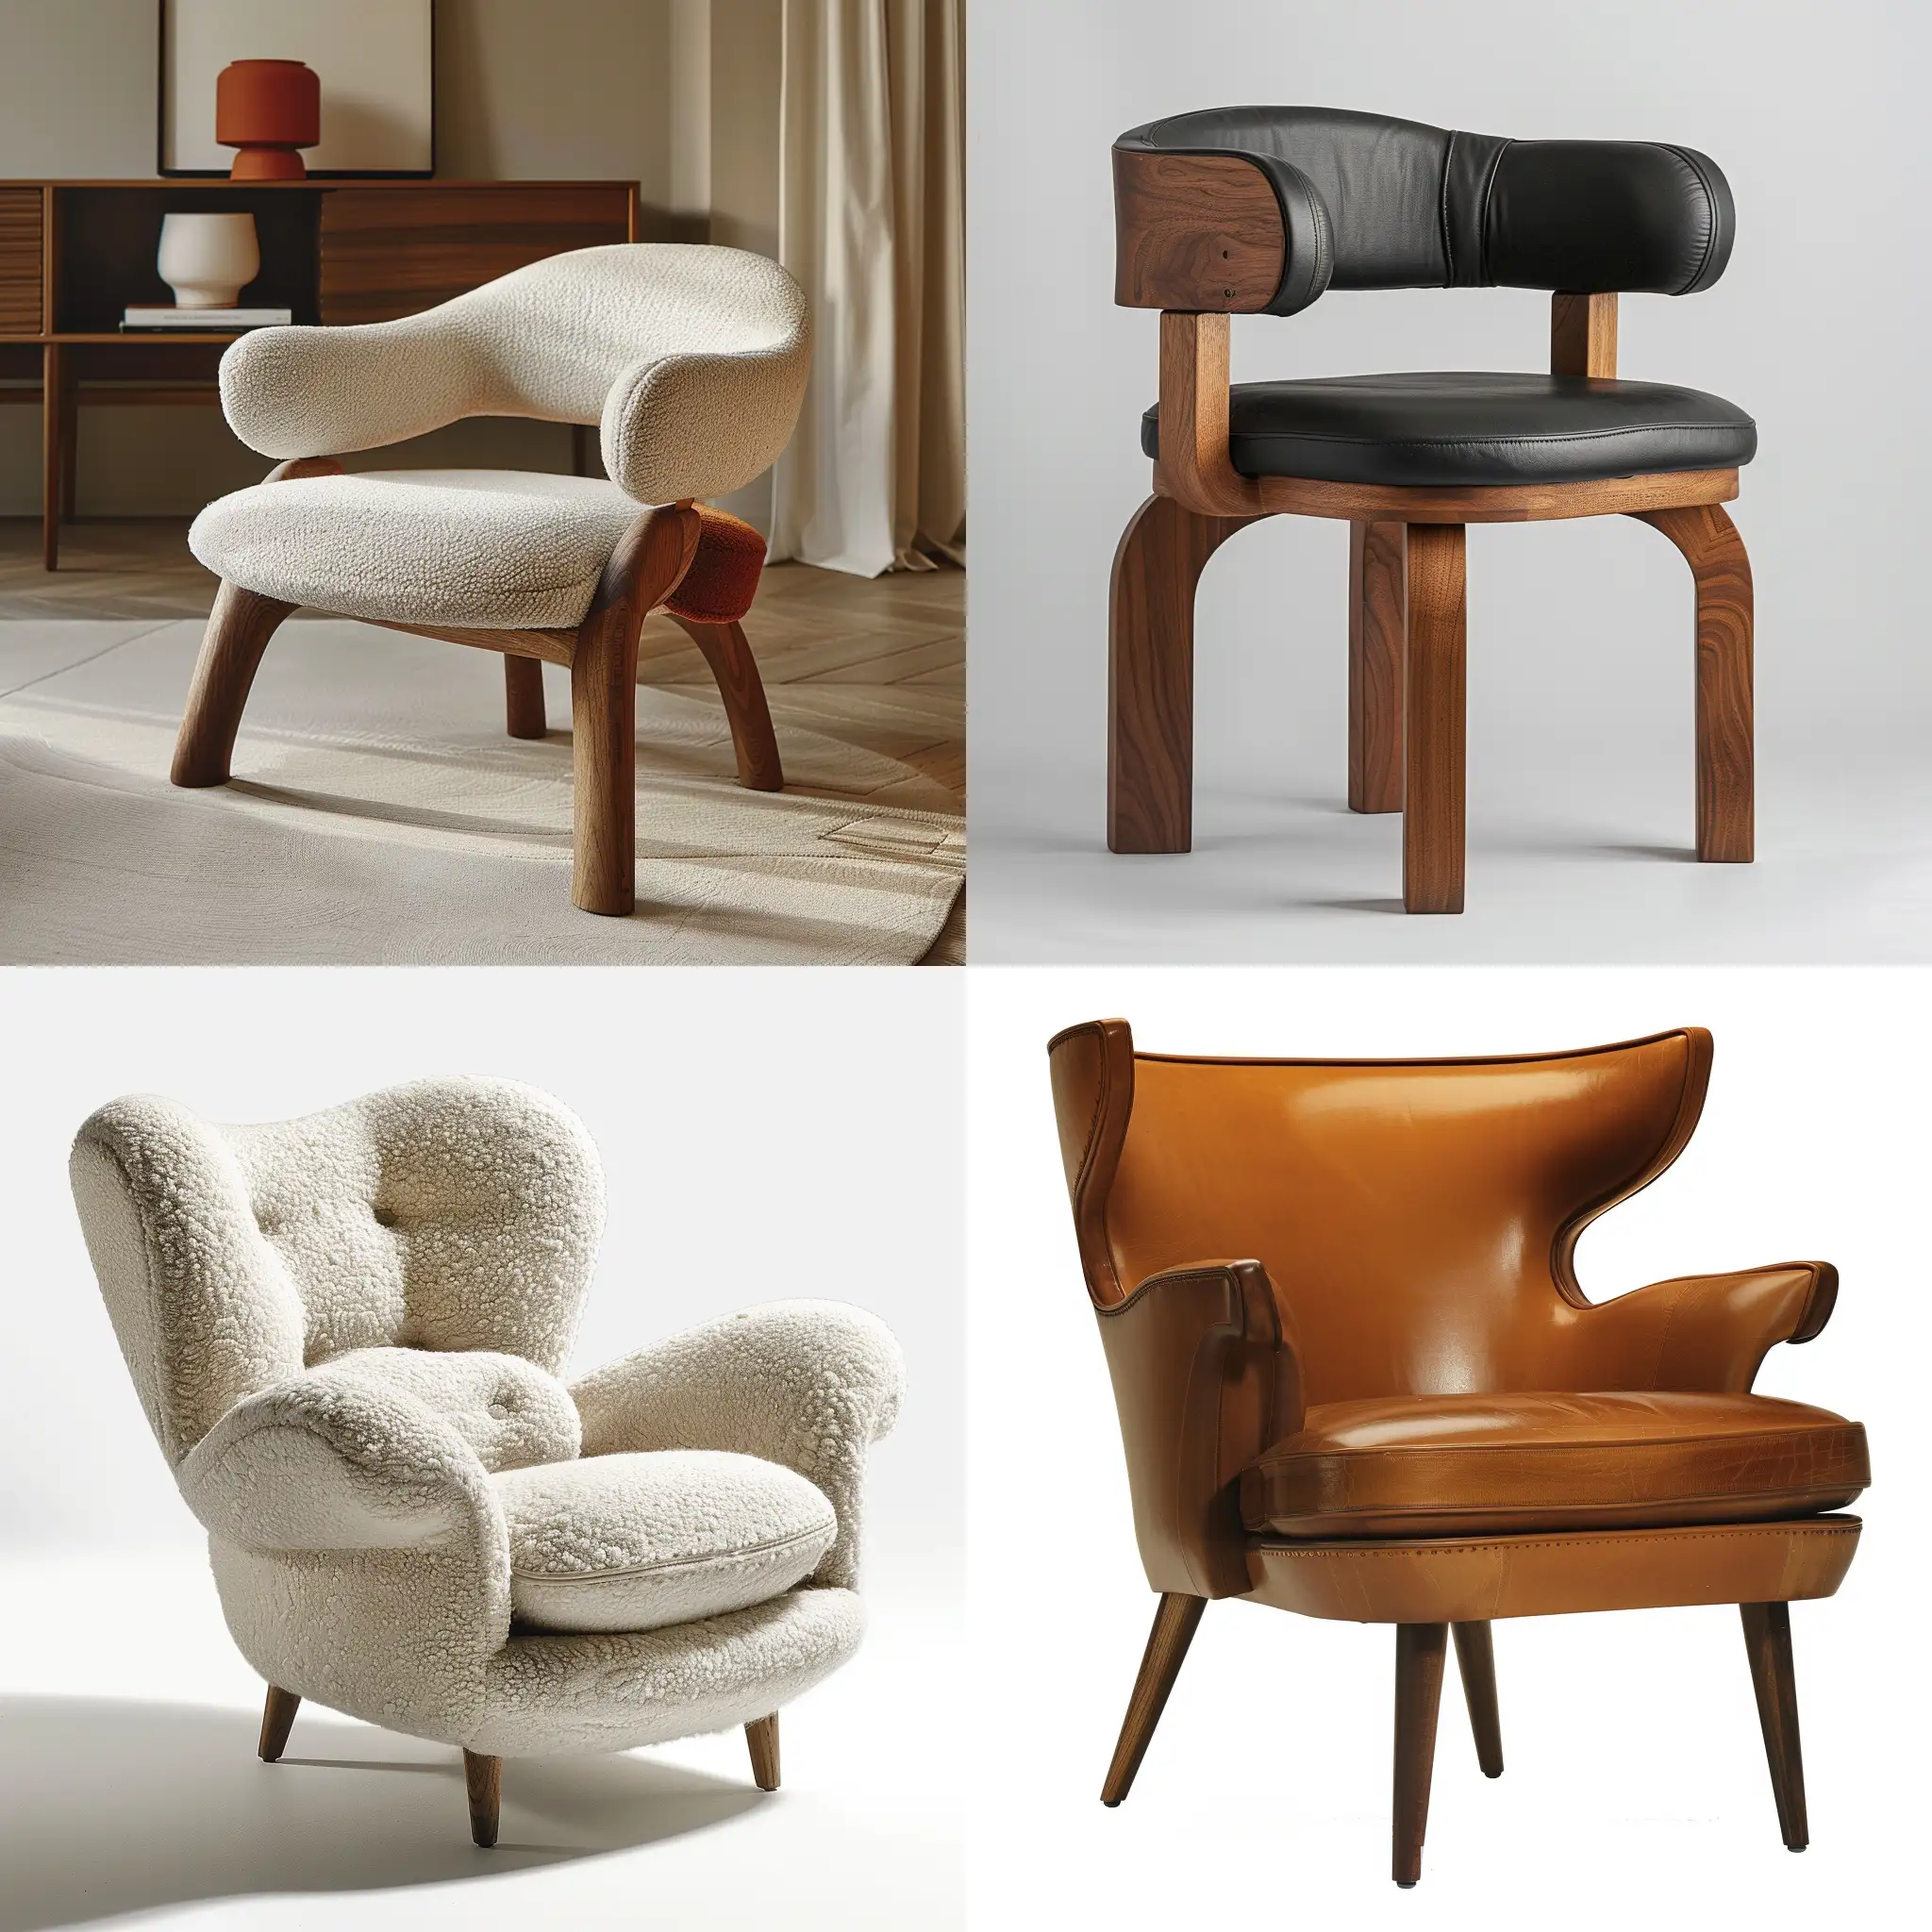 Modern-Minimalist-Chair-with-Geometric-Design